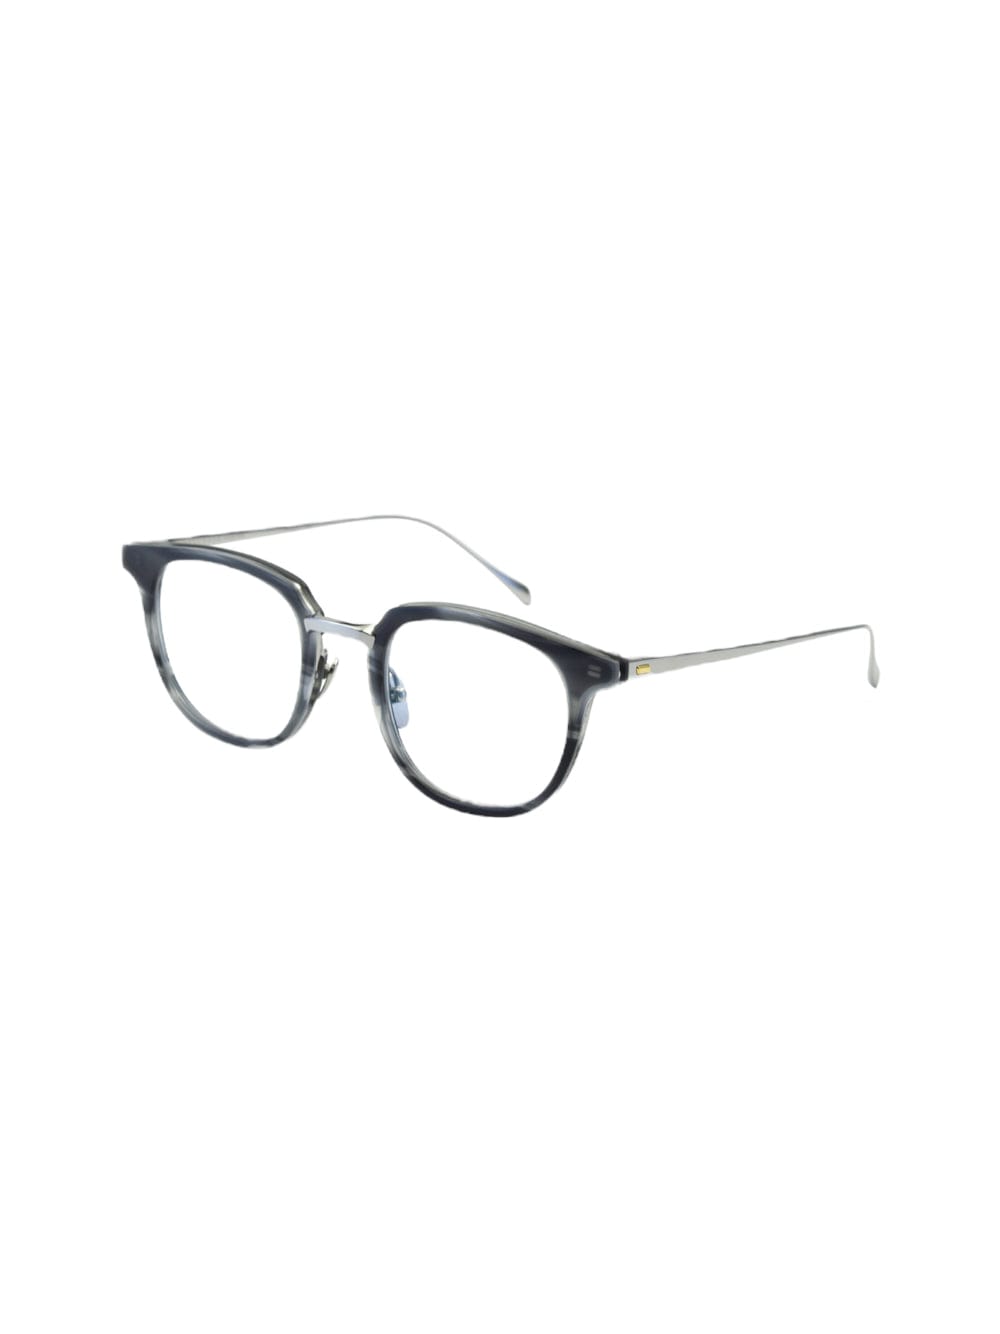 Masunaga Gms-821 - Grey Glasses